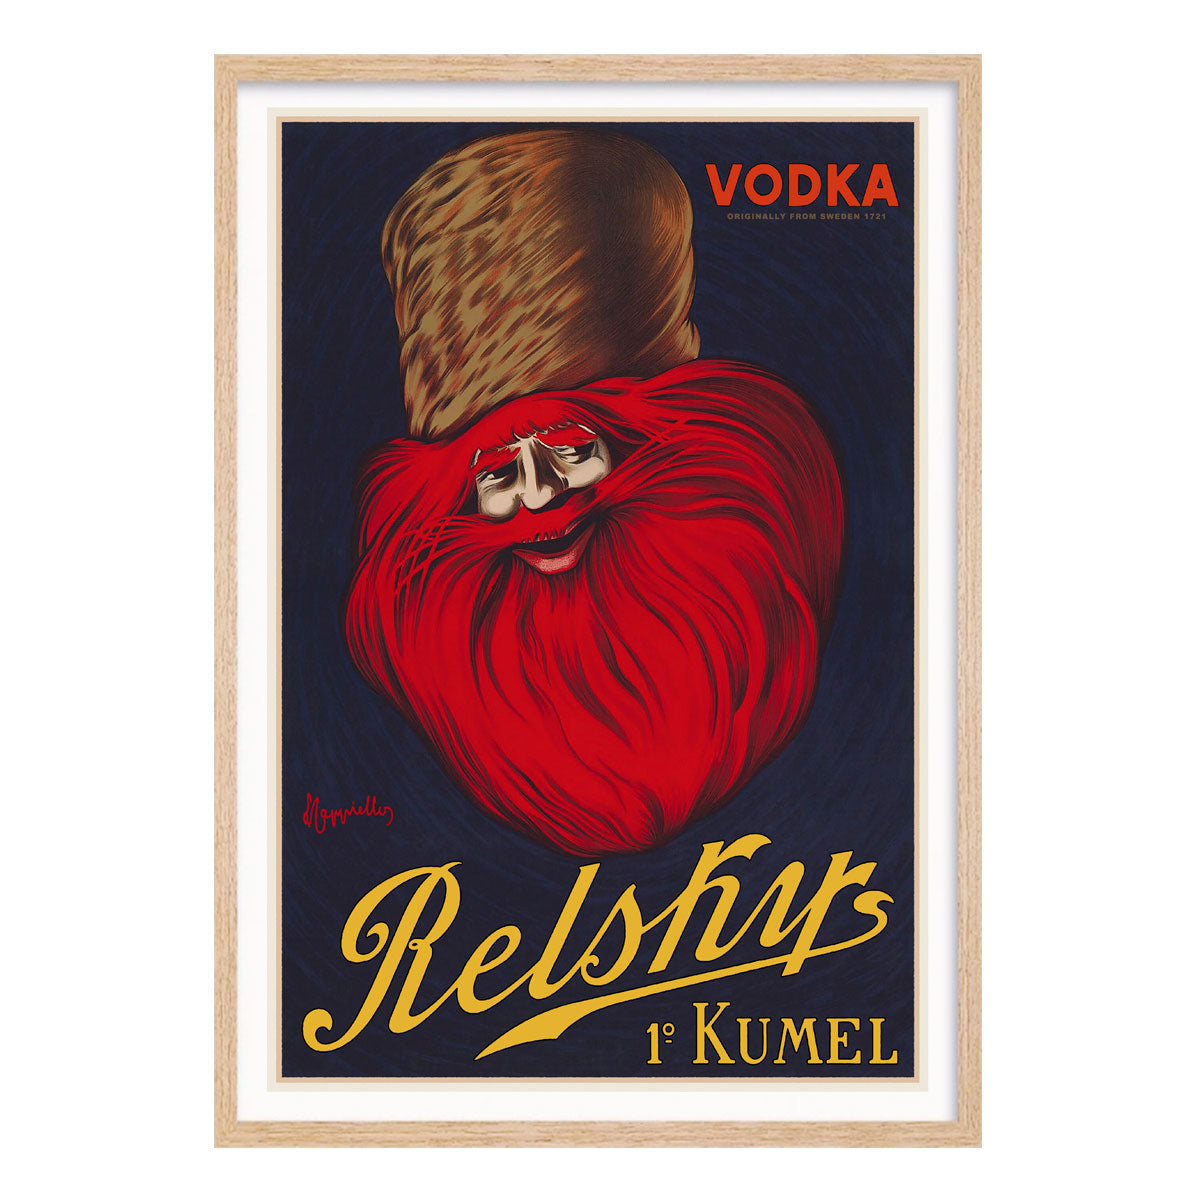 Relskys Vodka retro vintage oak framed print from Places We Luv